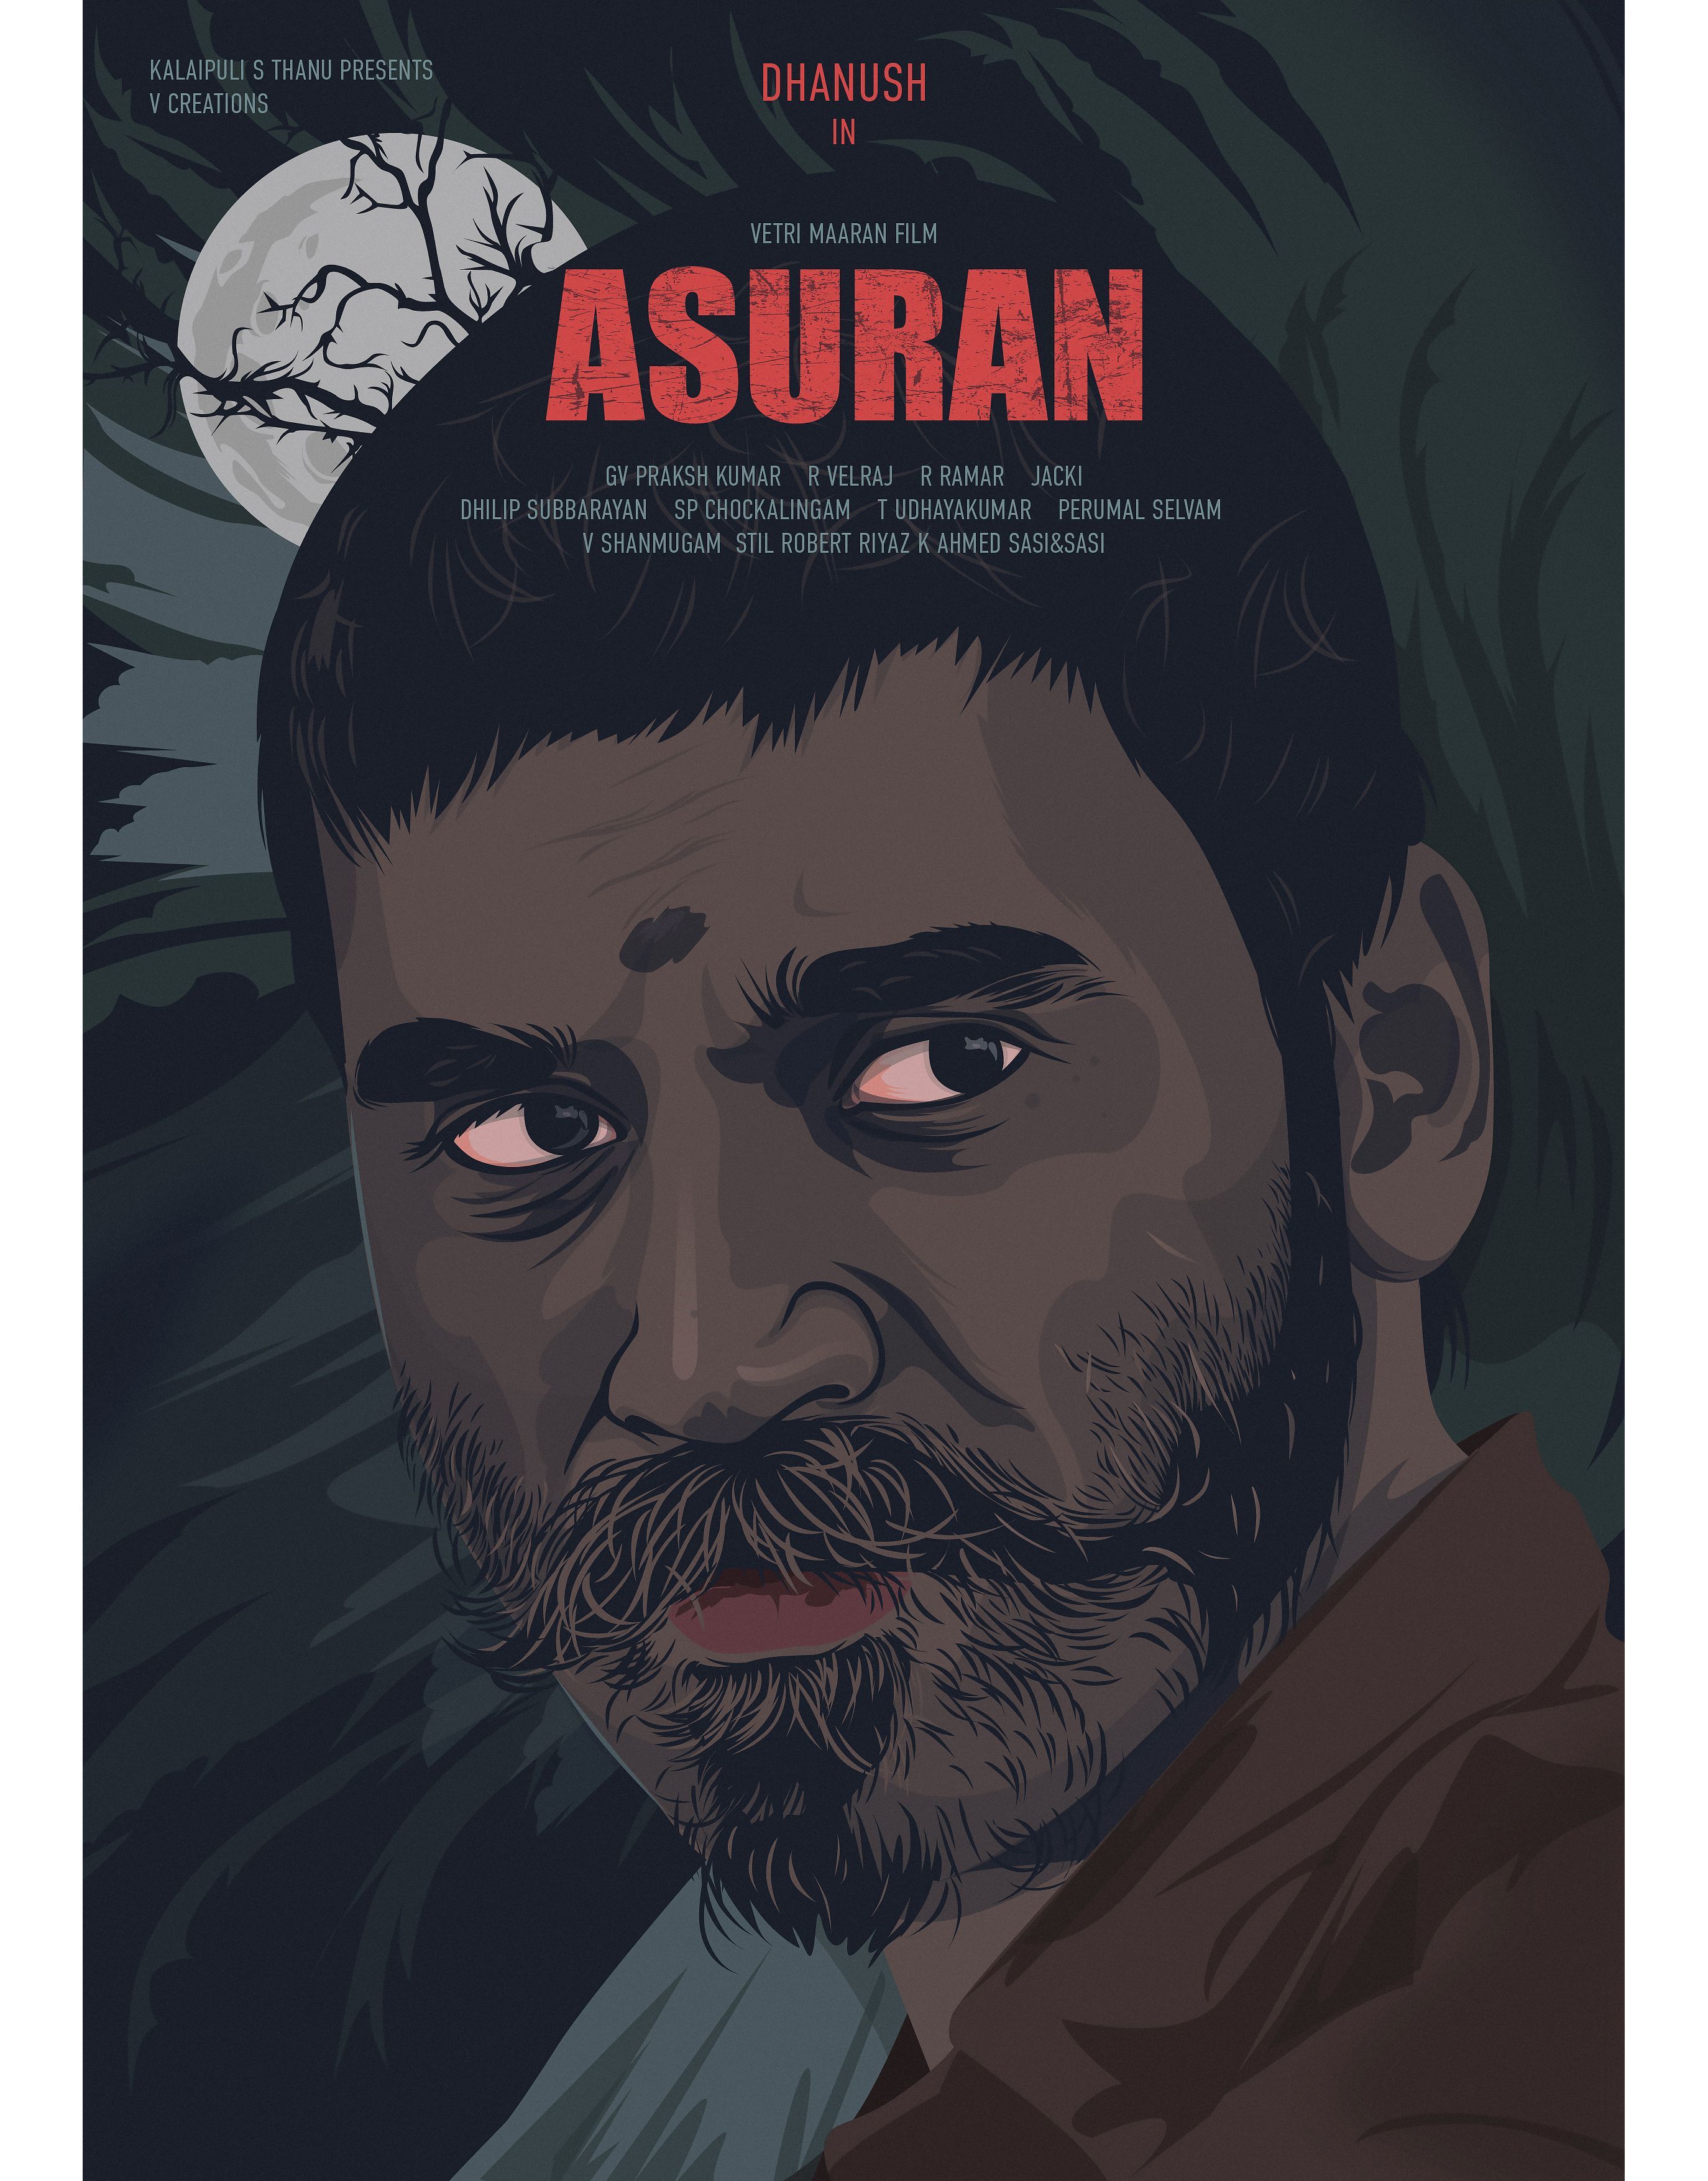 Asuran. Movie posters design, Movie posters minimalist, Movie posters